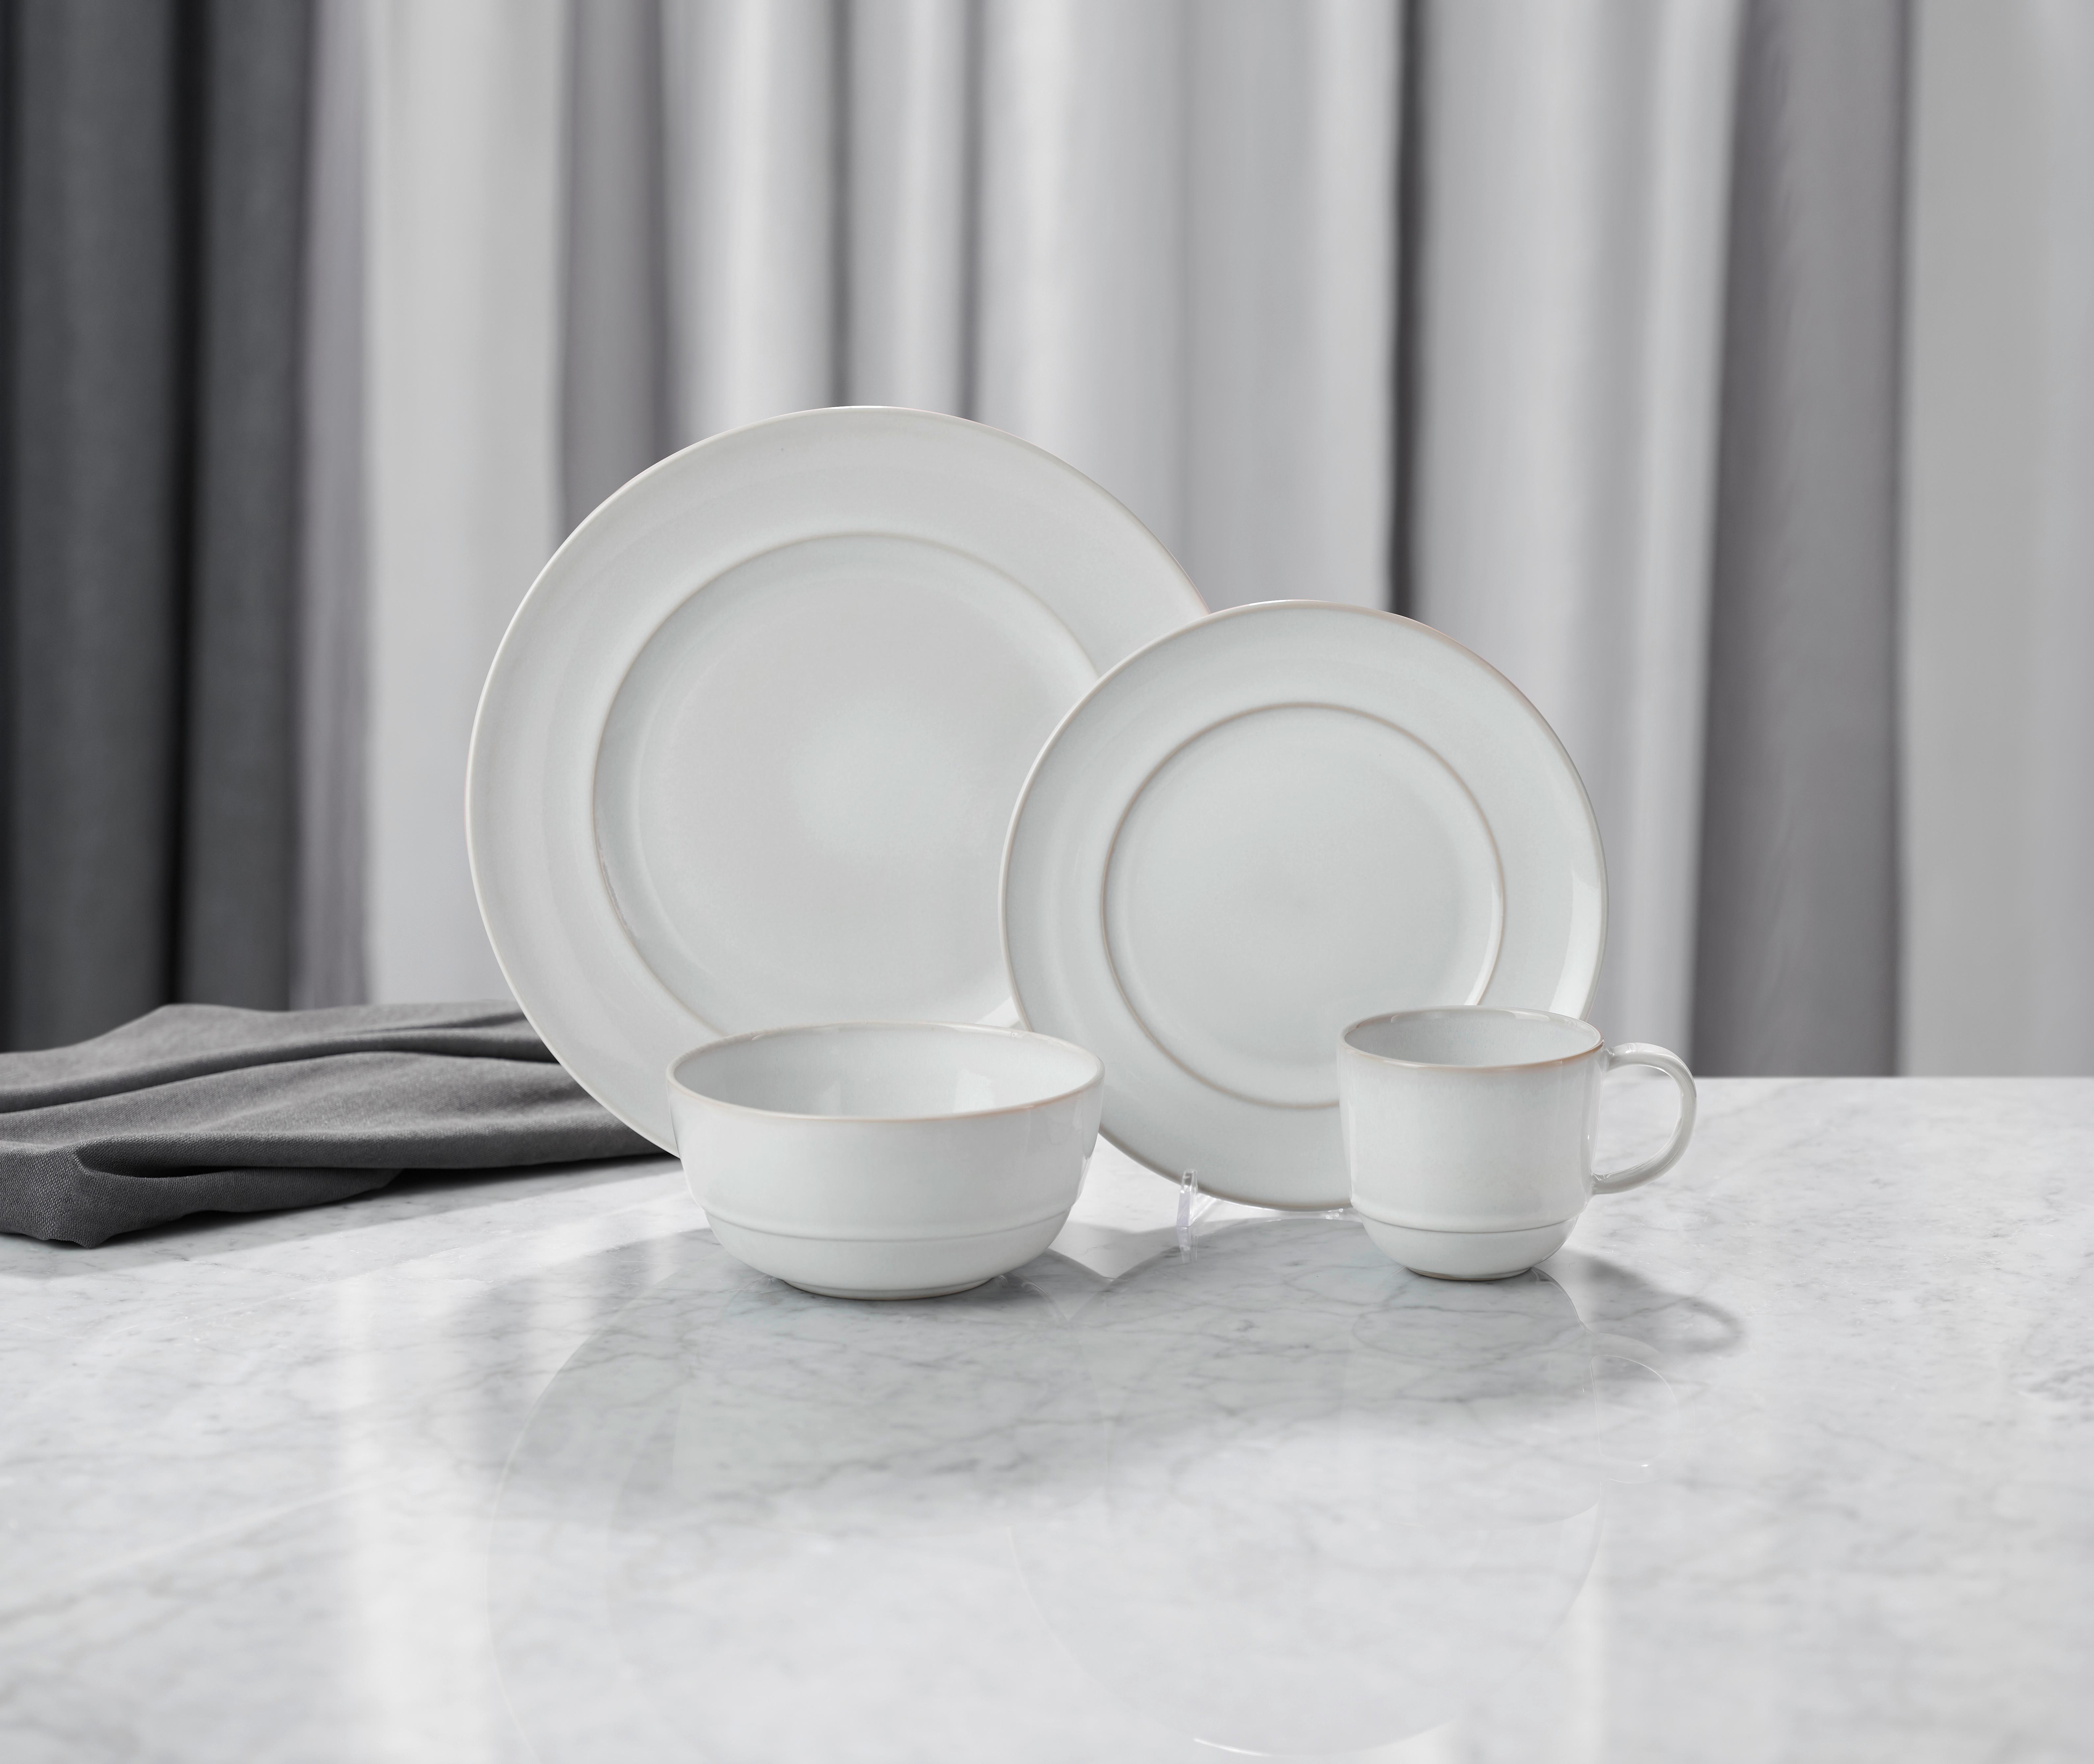 Serviciu de masă complet Vintage - alb, Romantik / Landhaus, ceramică - Premium Living